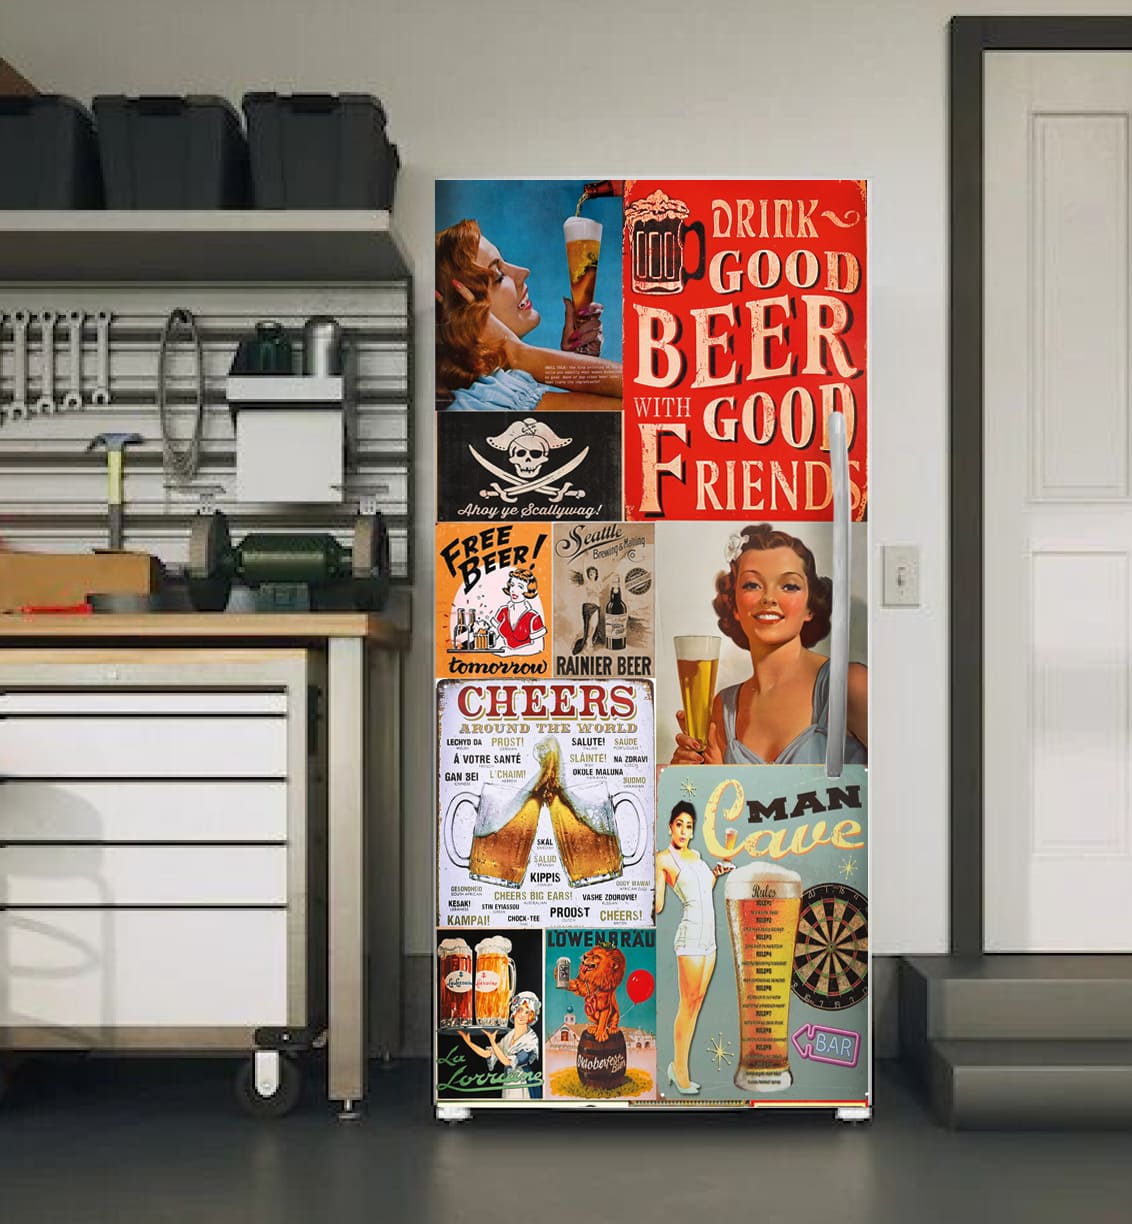 наклейка на холодильник ретро этикетки фото, наклейка на холодильник винтаж фото, наклейка на холодильник ретро плакаты фото, пивные этикетки наклейка